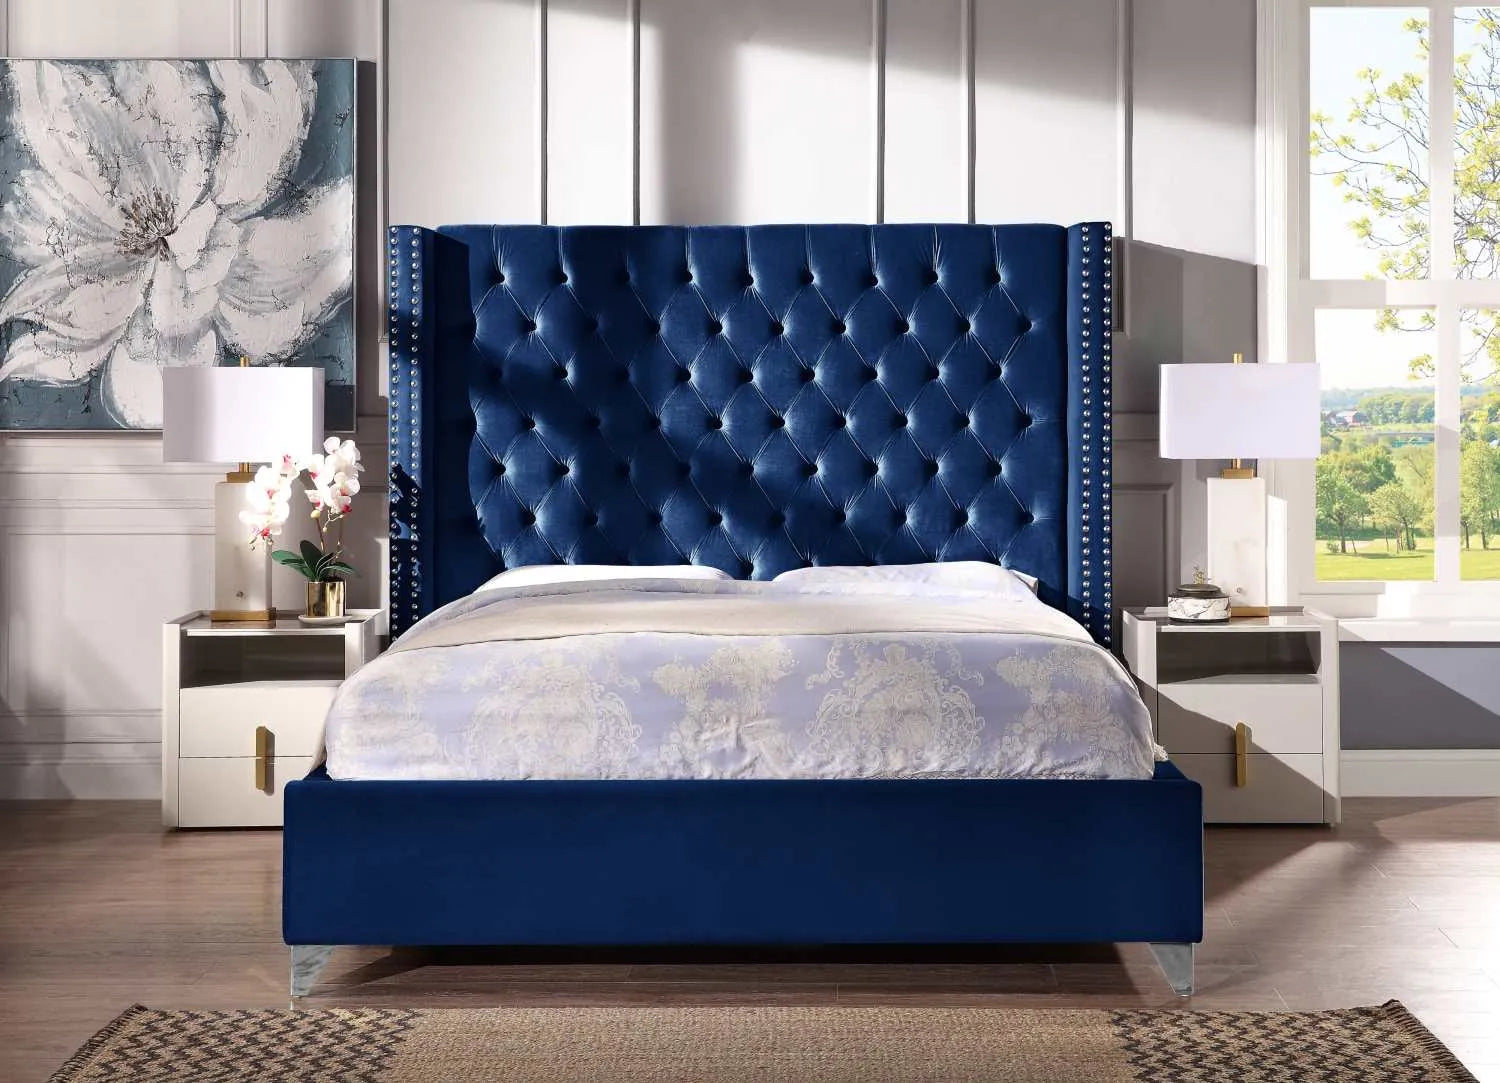 Emjaybrands wide selection of Beds and Bed Frames